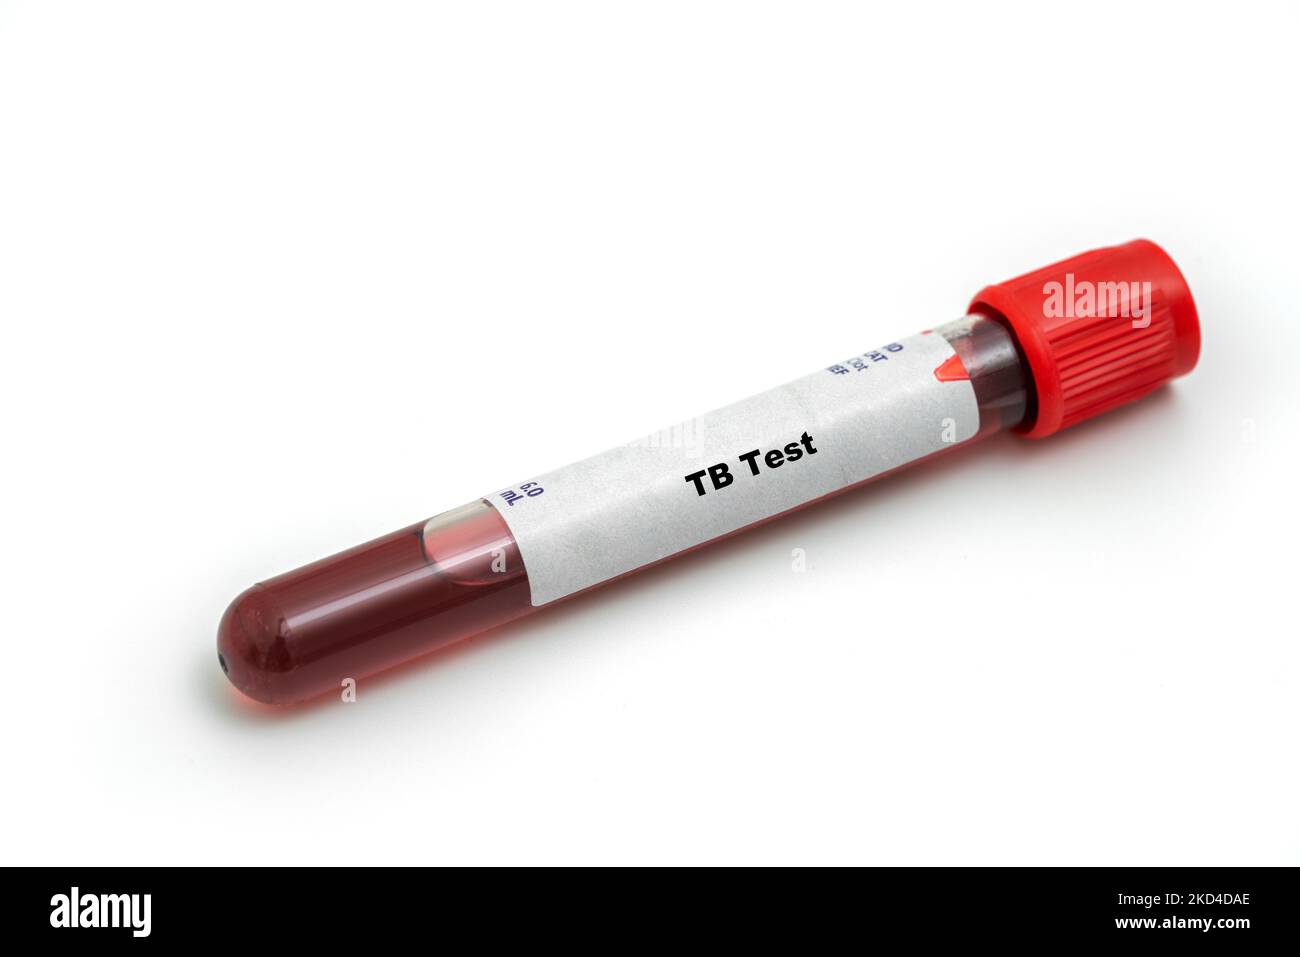 Tuberculosis test, conceptual image Stock Photo